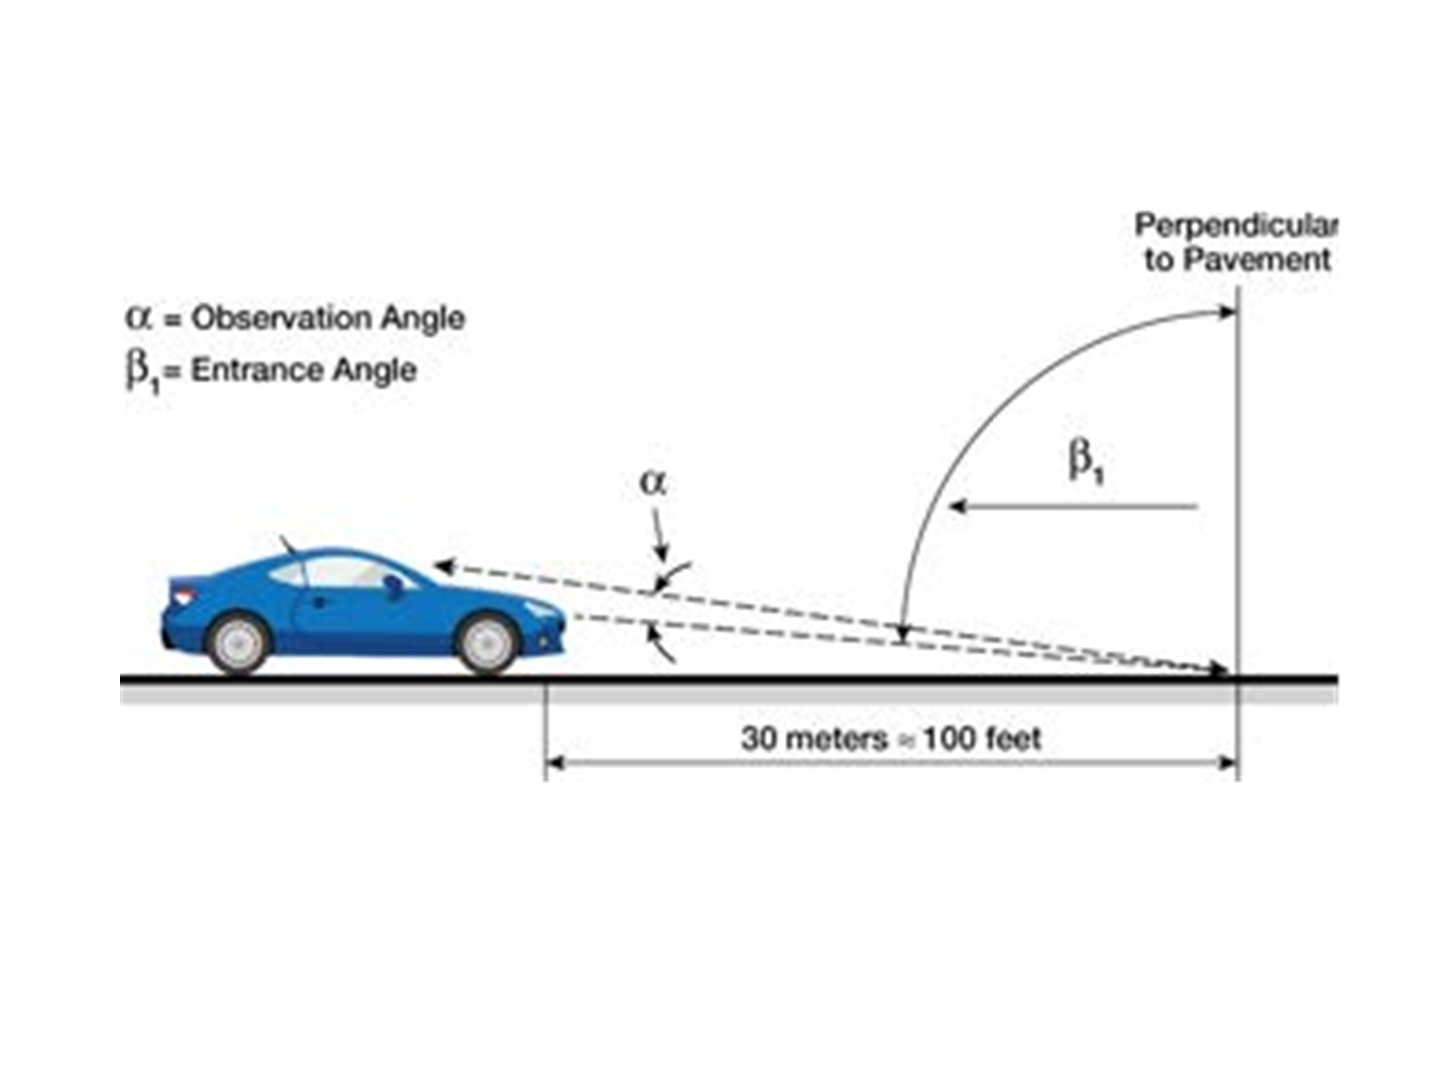 ASTM E1710 retroreflectivity levels for pavement markings